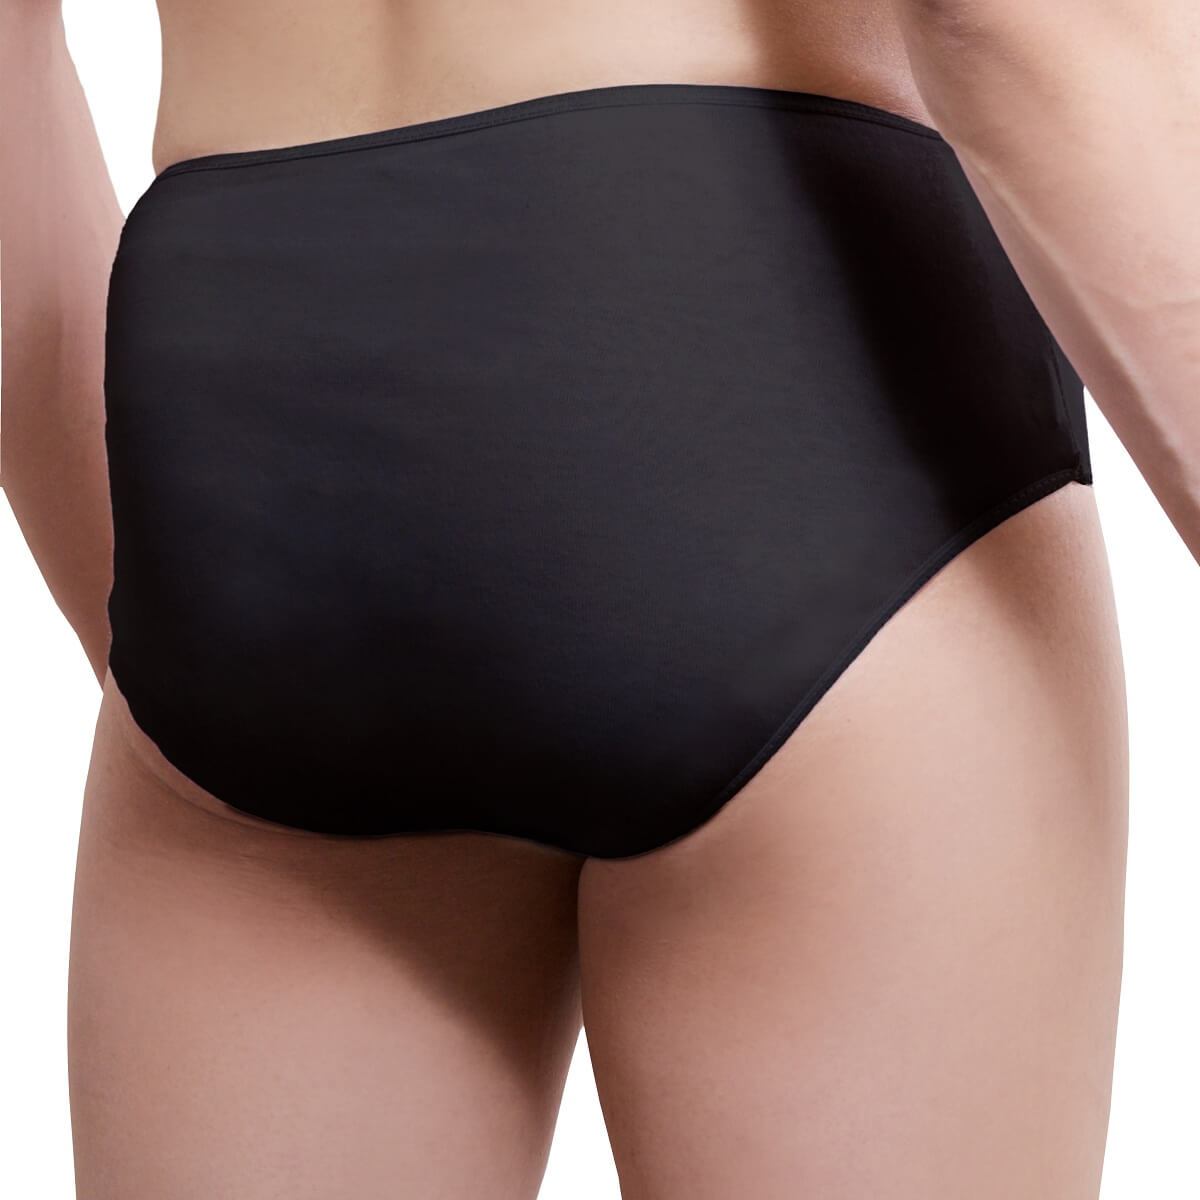 Disposable men's black cotton underwear for hospital travel spa sauna – OW- Travel